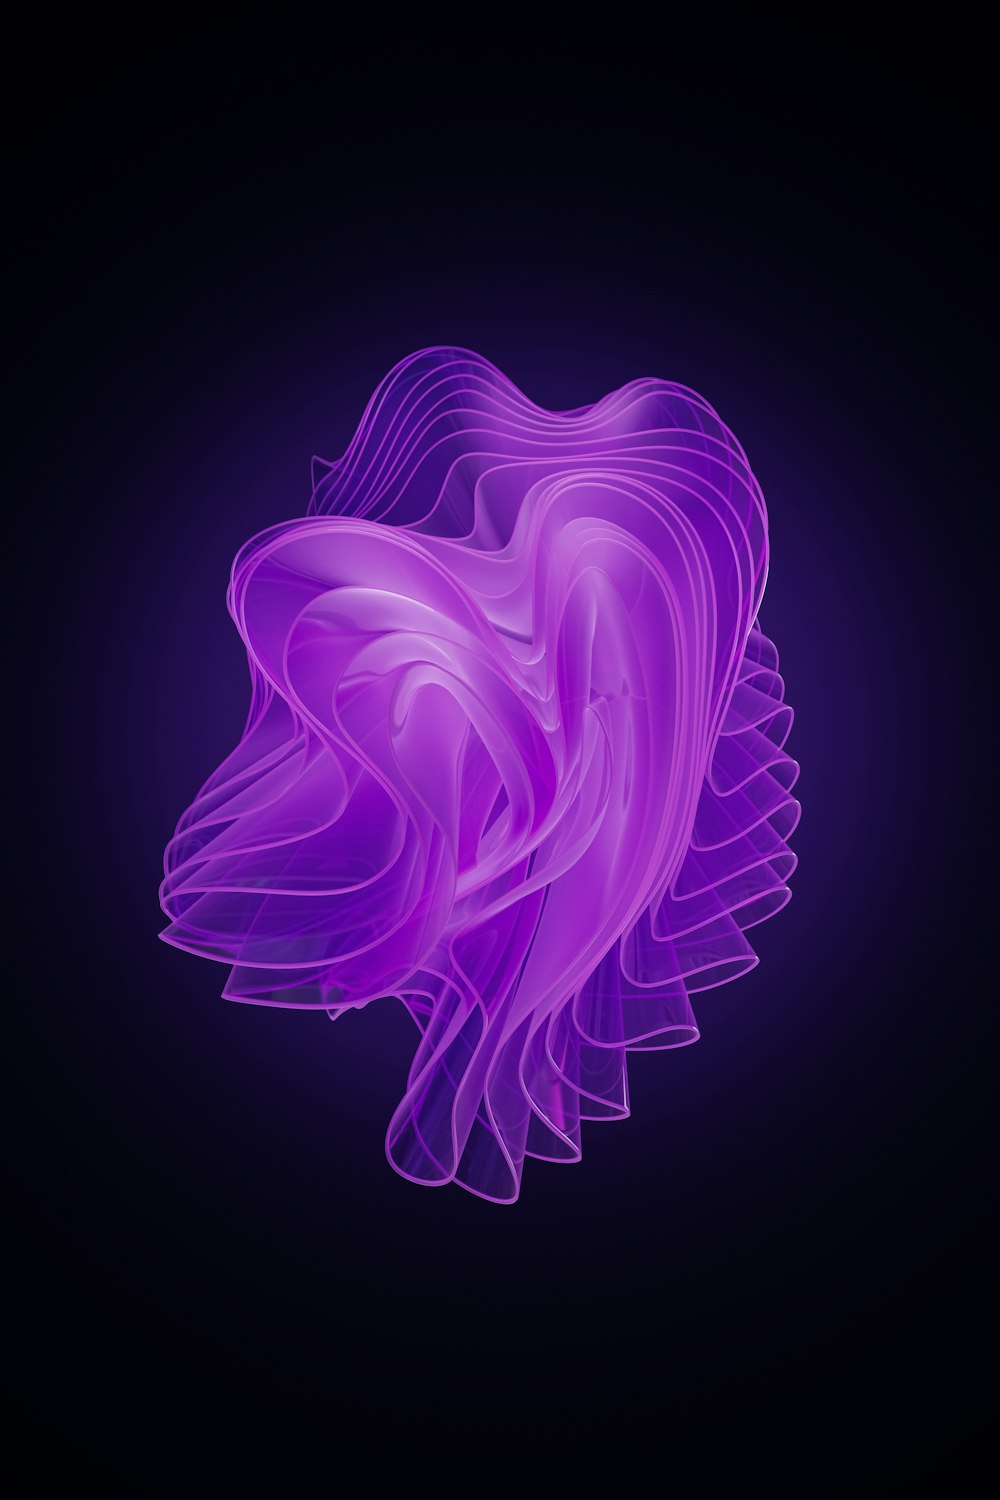 a purple liquid swirl on a black background